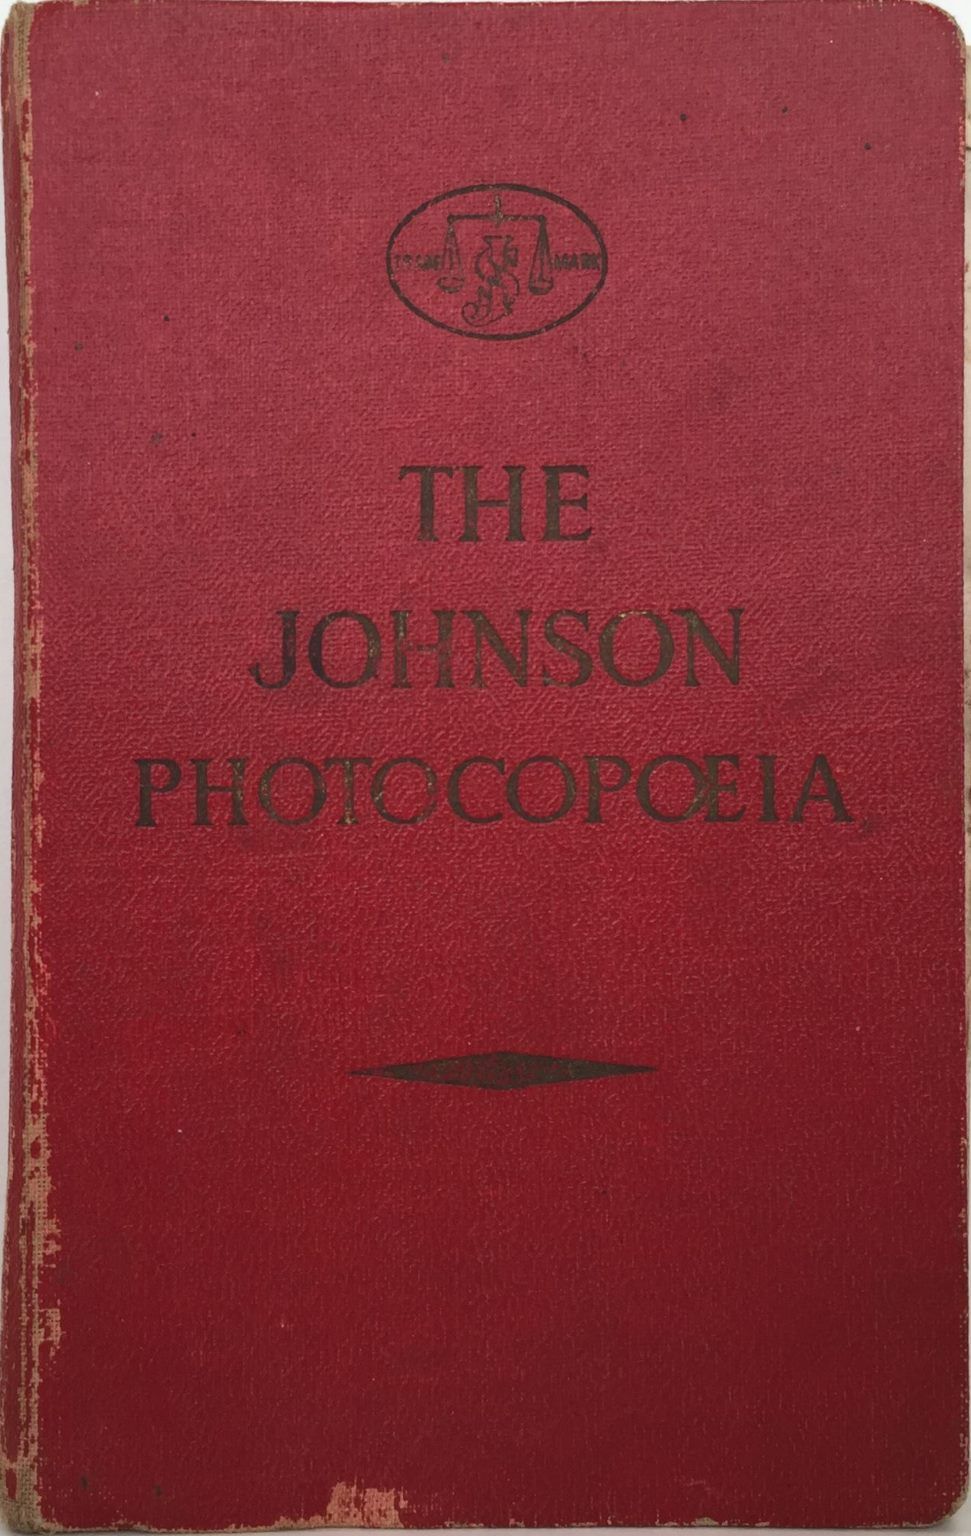 THE JOHNSON PHOTOCOPOEIA: Vintage Photographic Guidebook